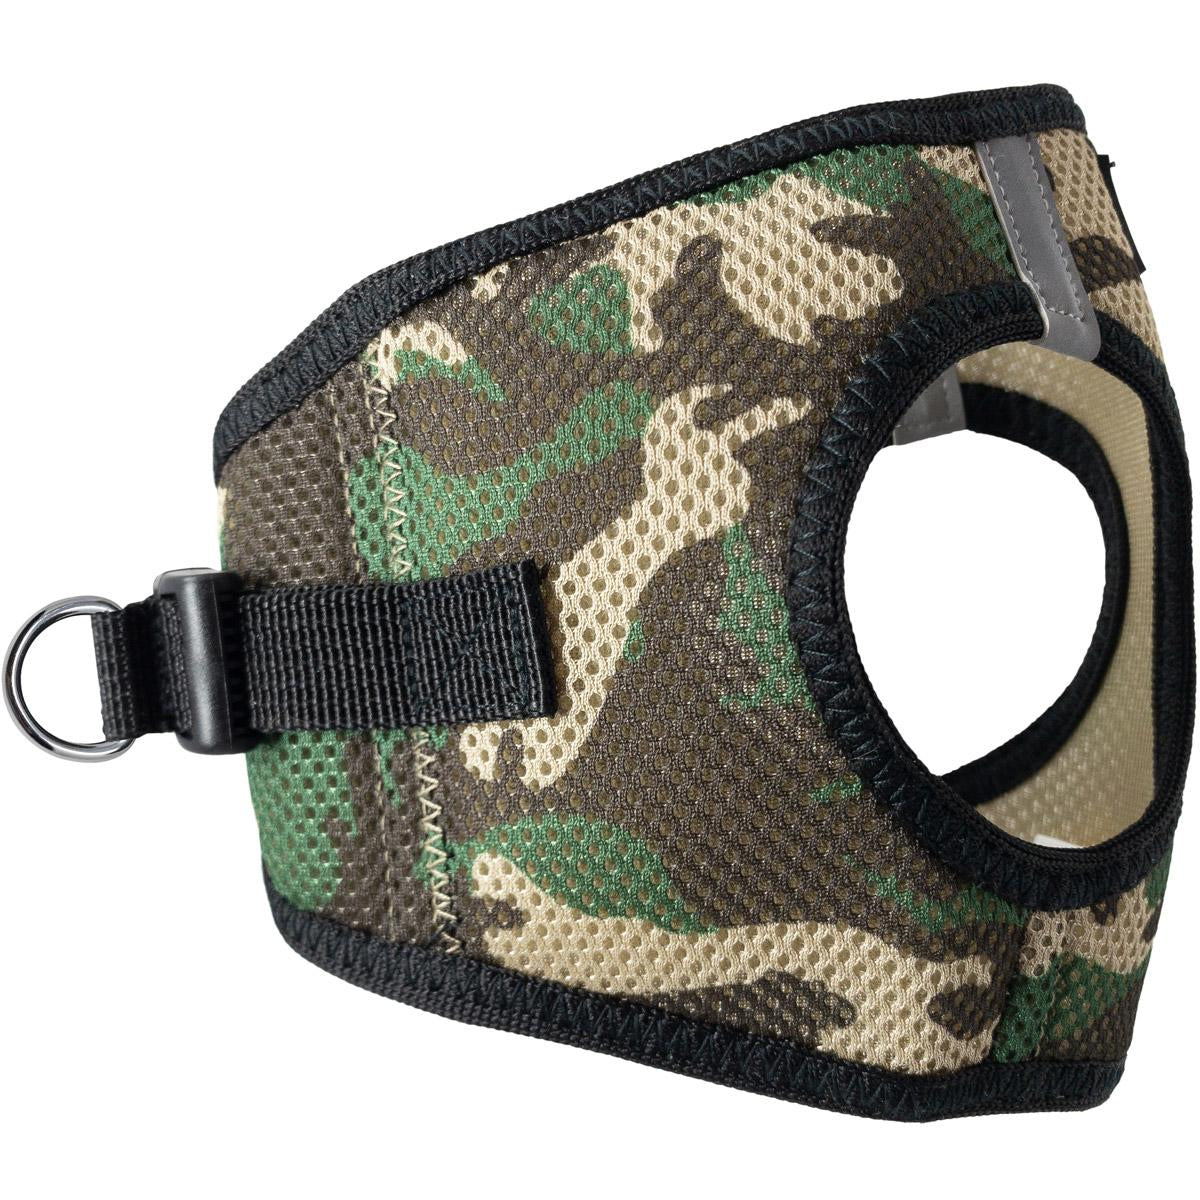 american-river-choke-free-dog-harness-camouflage-collection-green-camo-7359.jpg